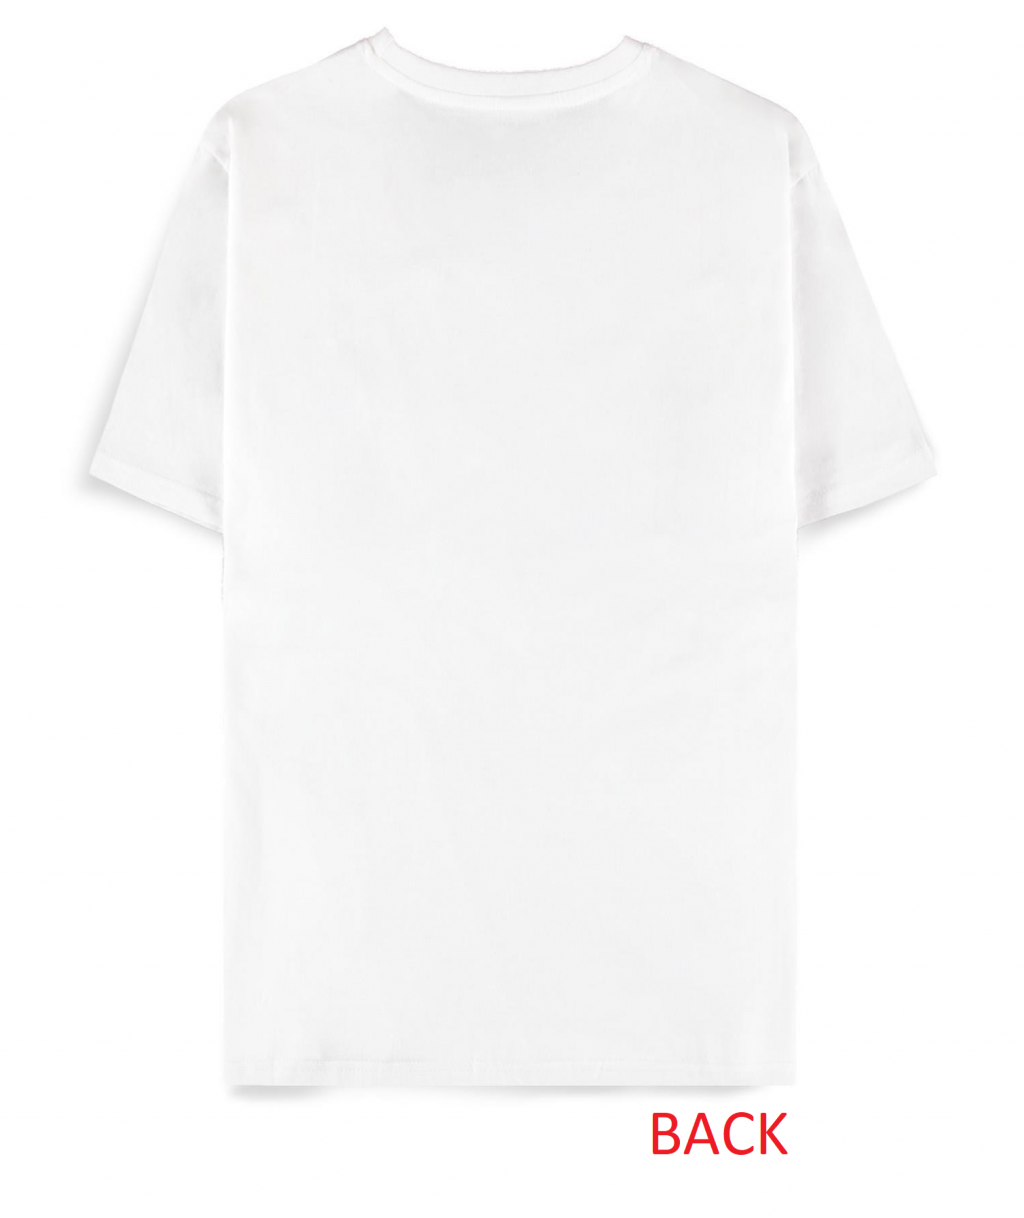 DEATH NOTE - Ryuk Square - Men's White T-Shirt (S)